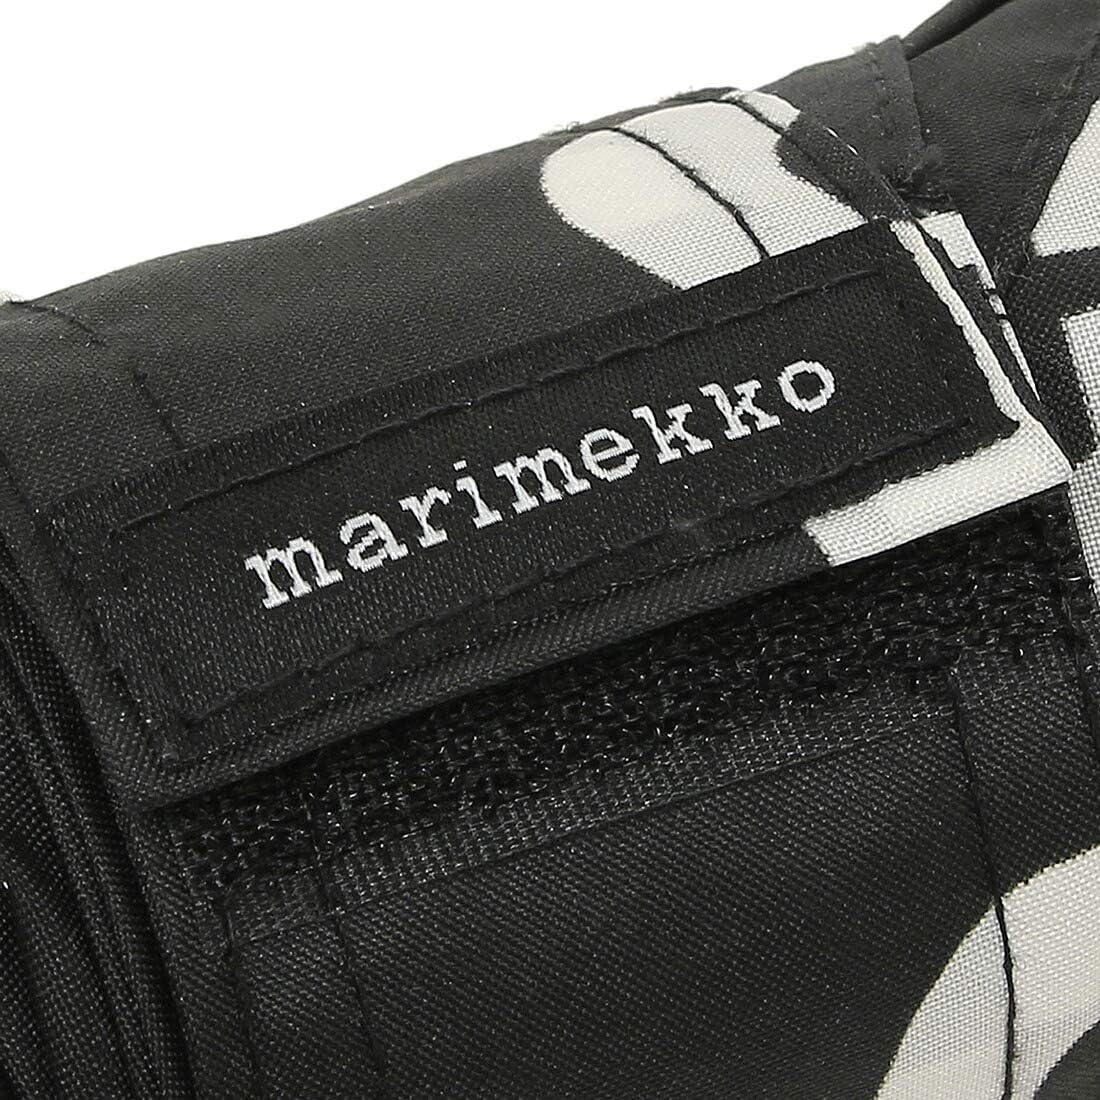 marimekko 折り畳み傘 MARILOGO 048859 910 ブラック/ホワイト [並行輸入品]